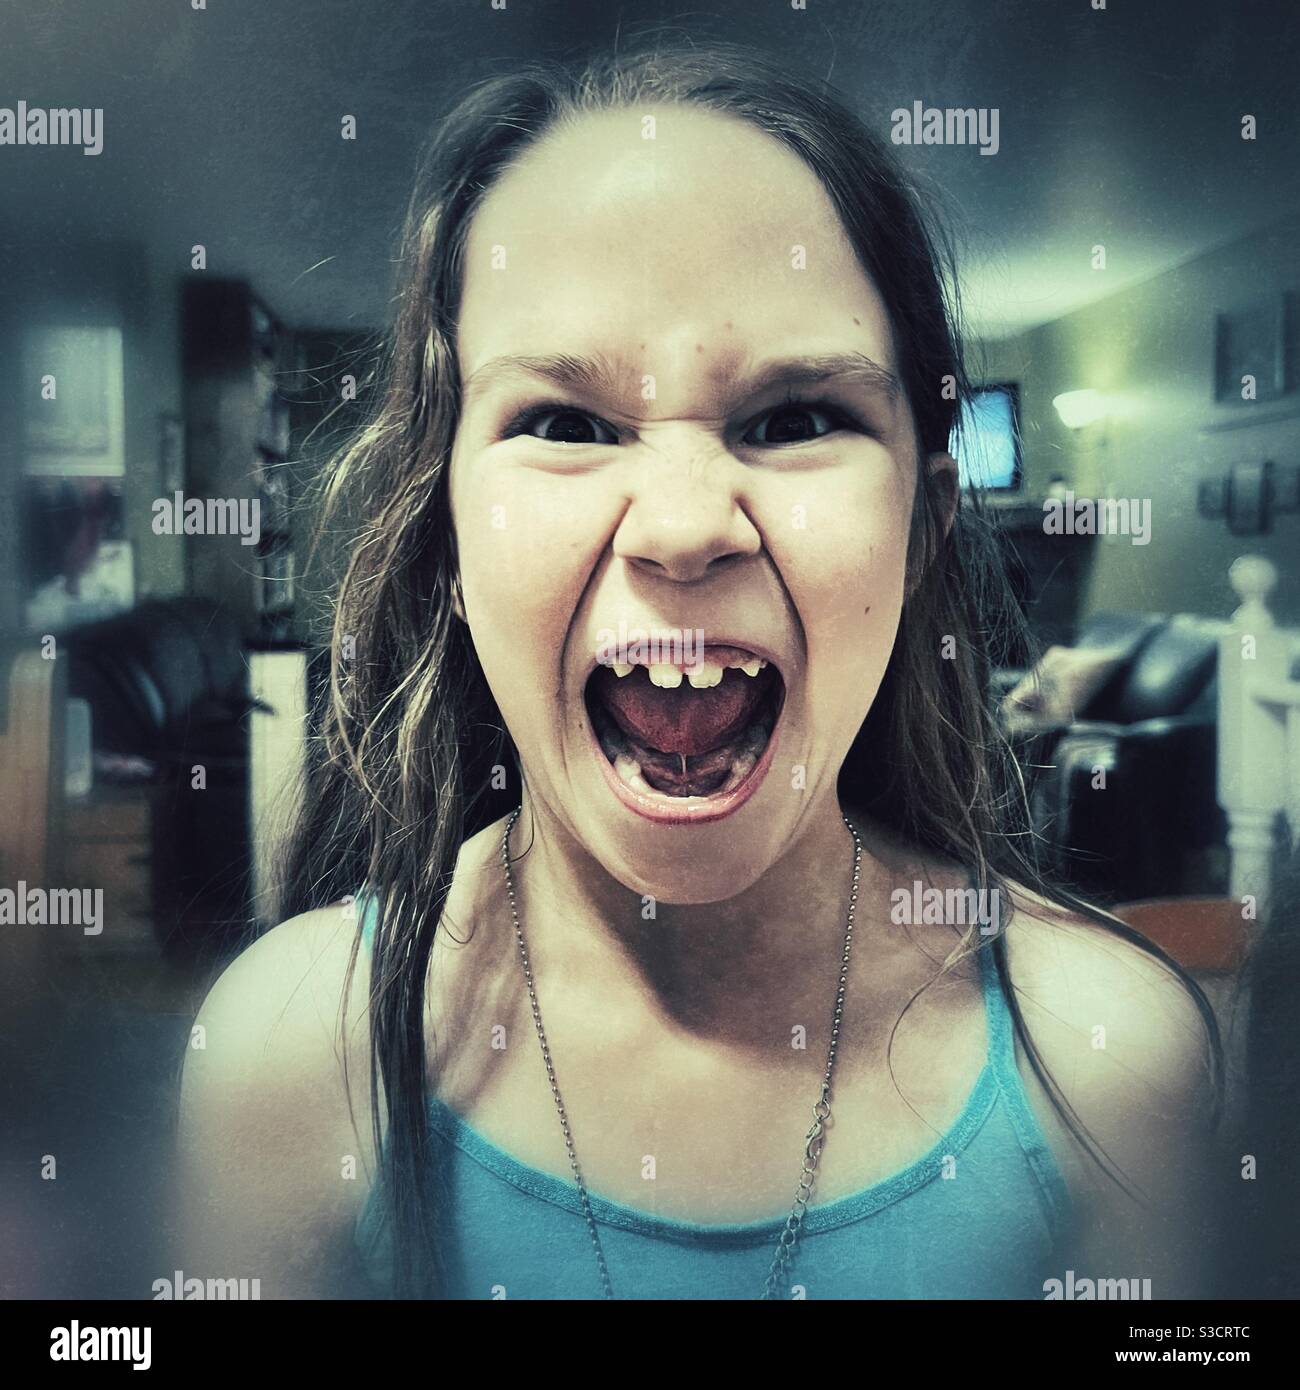 Portrait of angry yelling girl Stock Photo